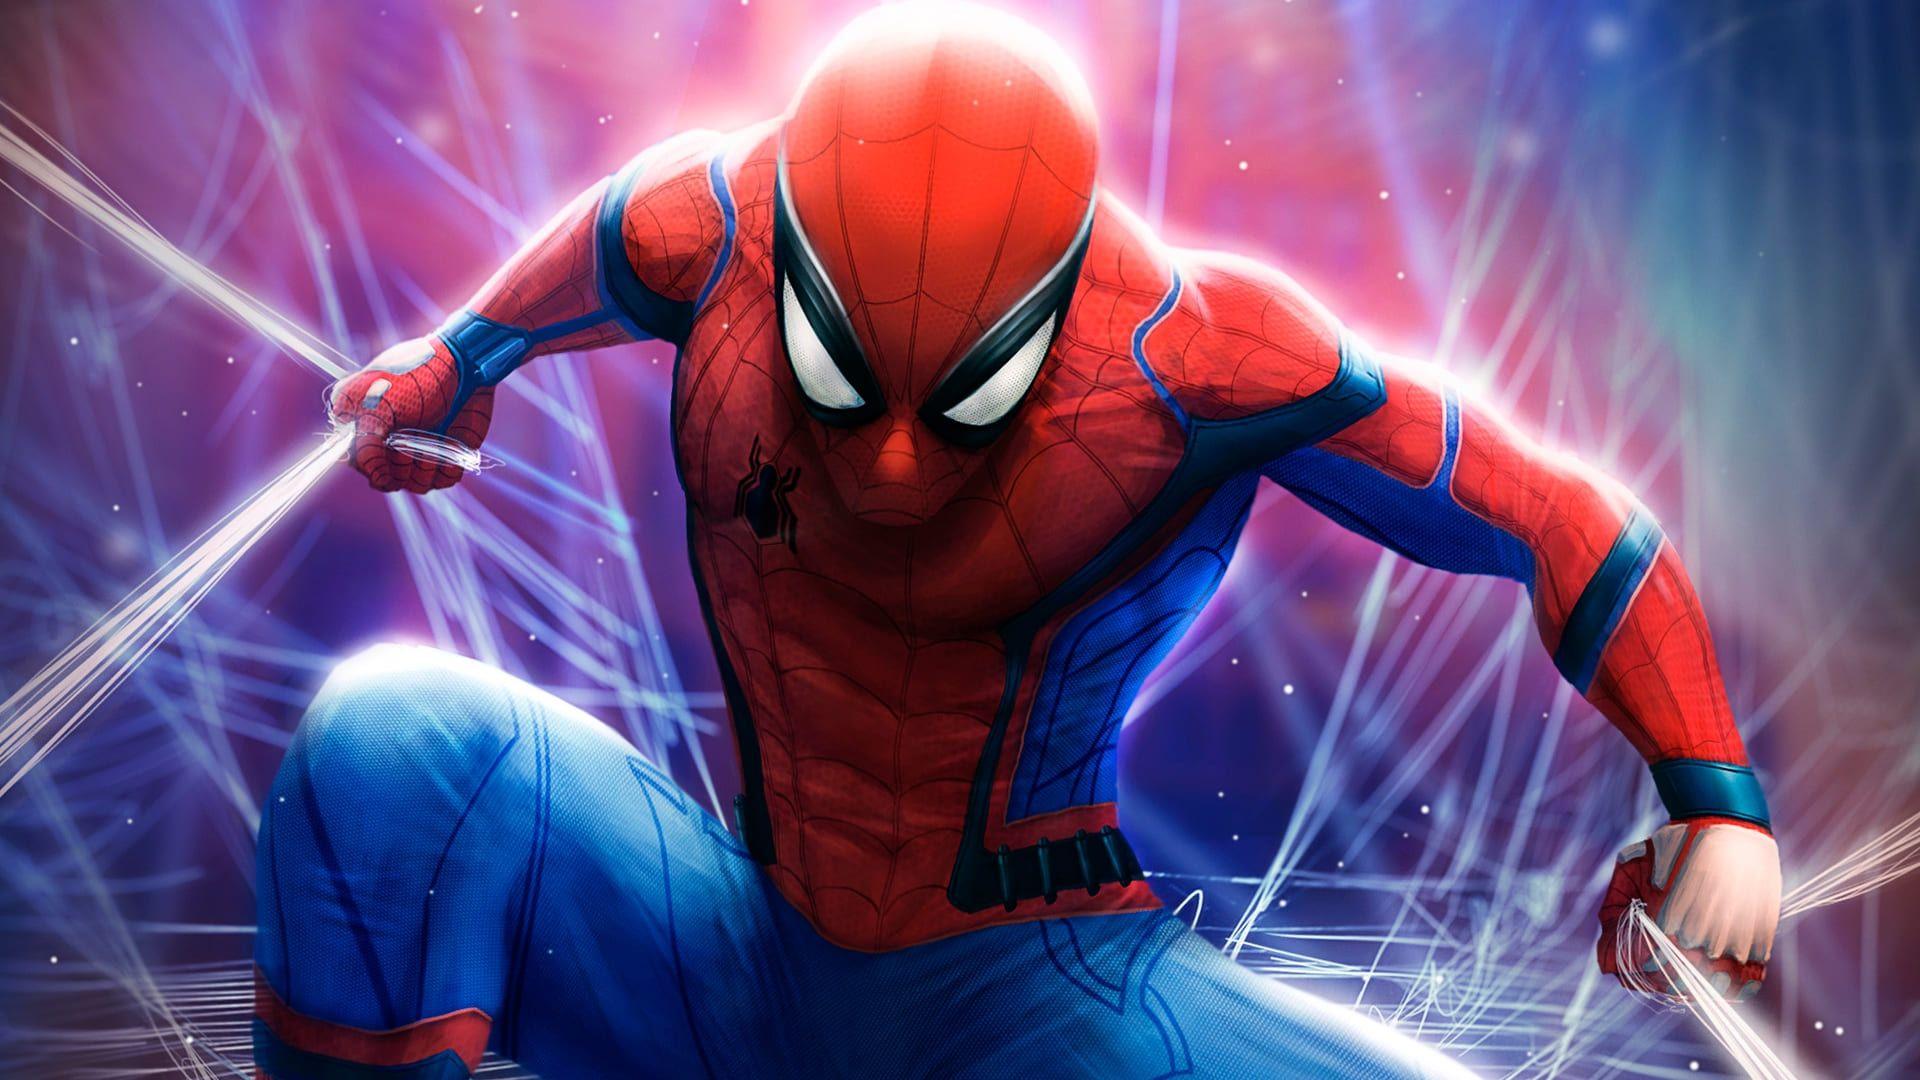 Cool Spiderman Desktop Wallpapers - Top Free Cool Spiderman Desktop